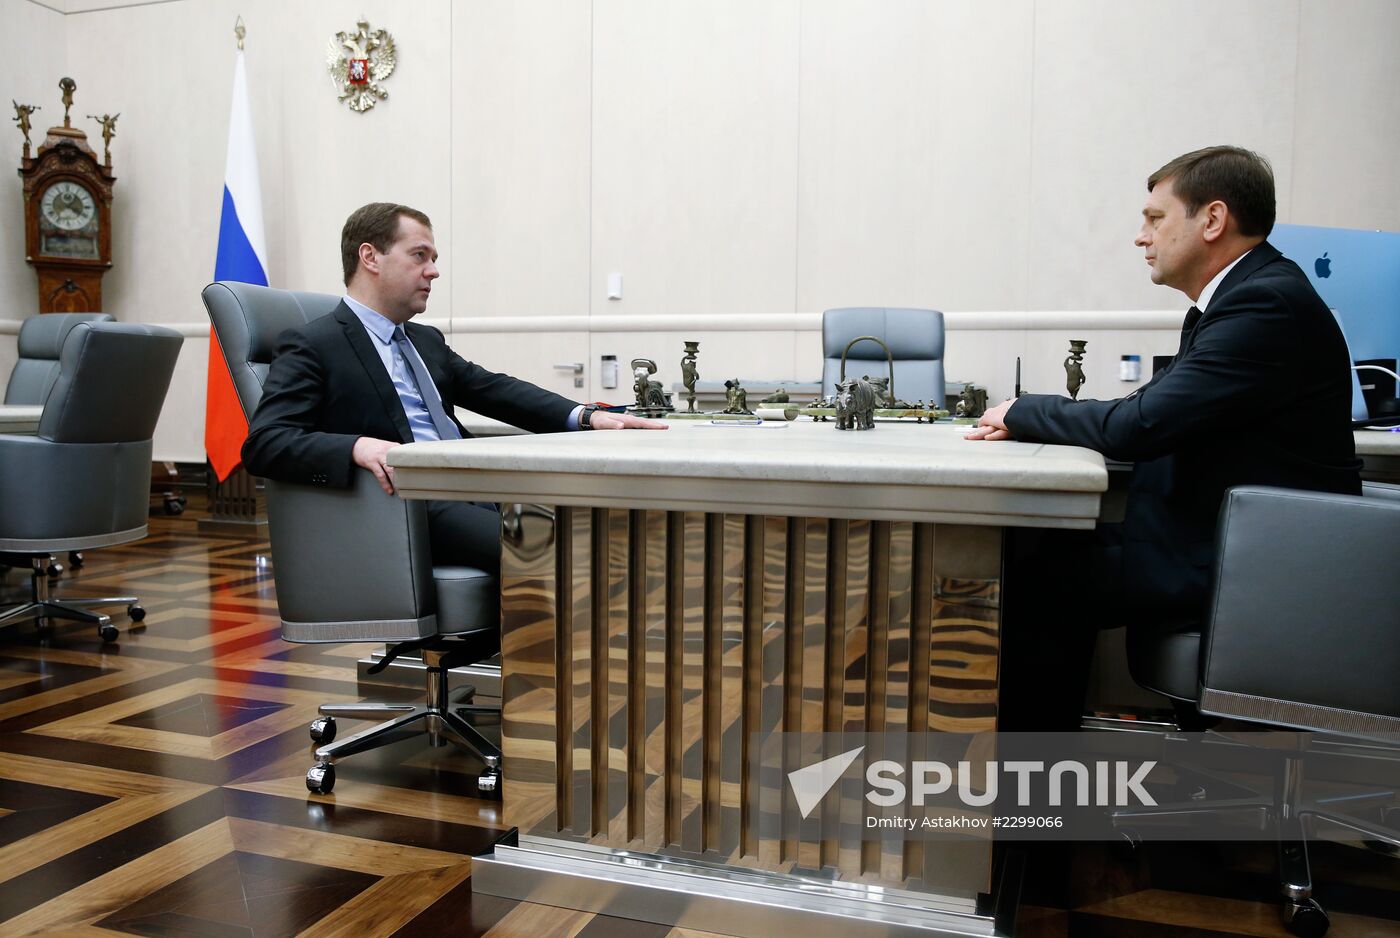 Dmitry Medvedev meets with Oleg Ostapenko